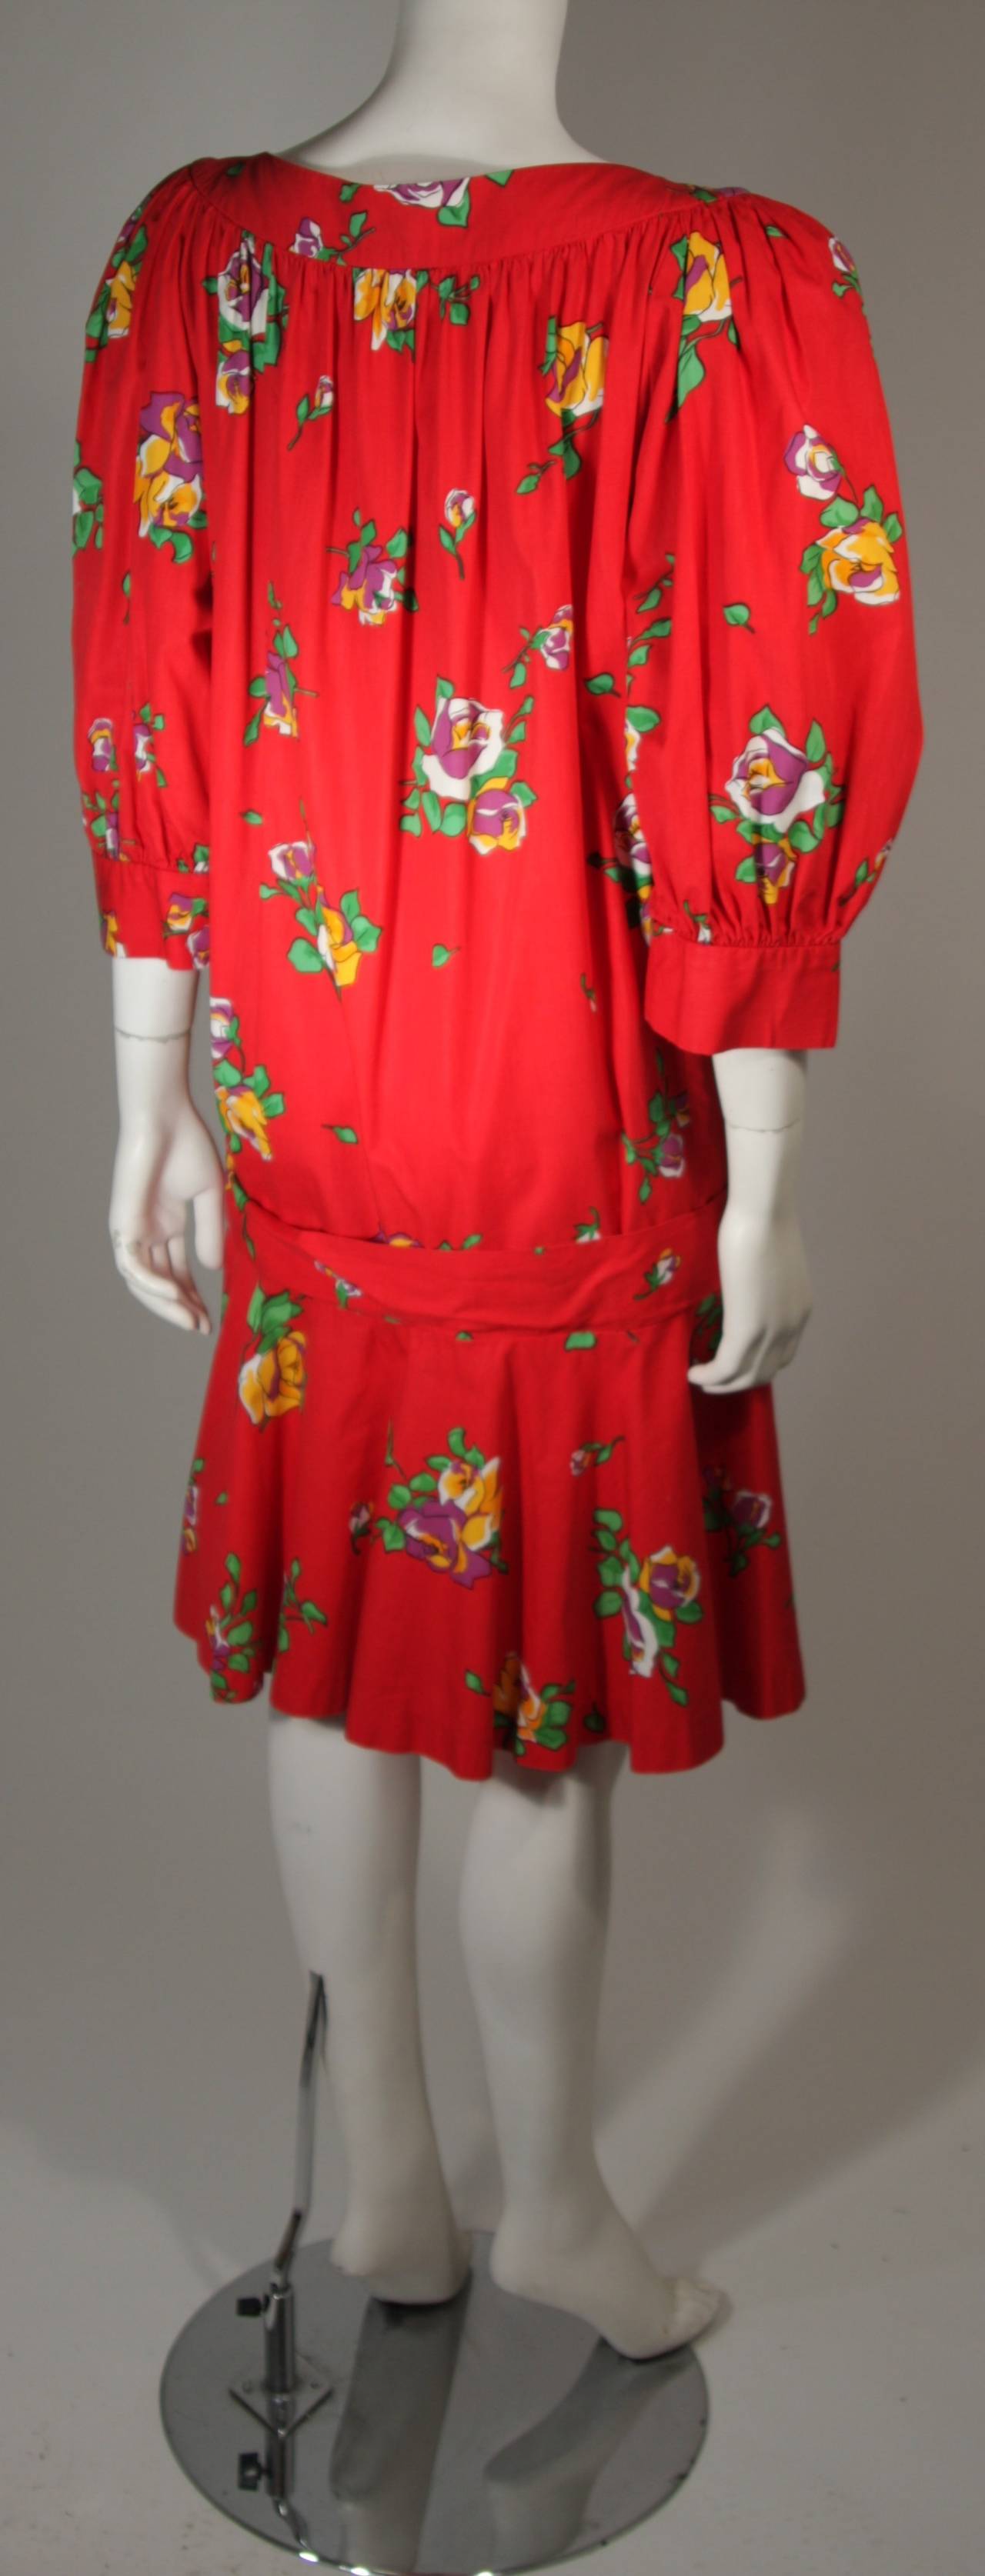 Yves Saint Laurent Red Cotton Drop Waist Dress with Floral Motif Size 36 For Sale 3